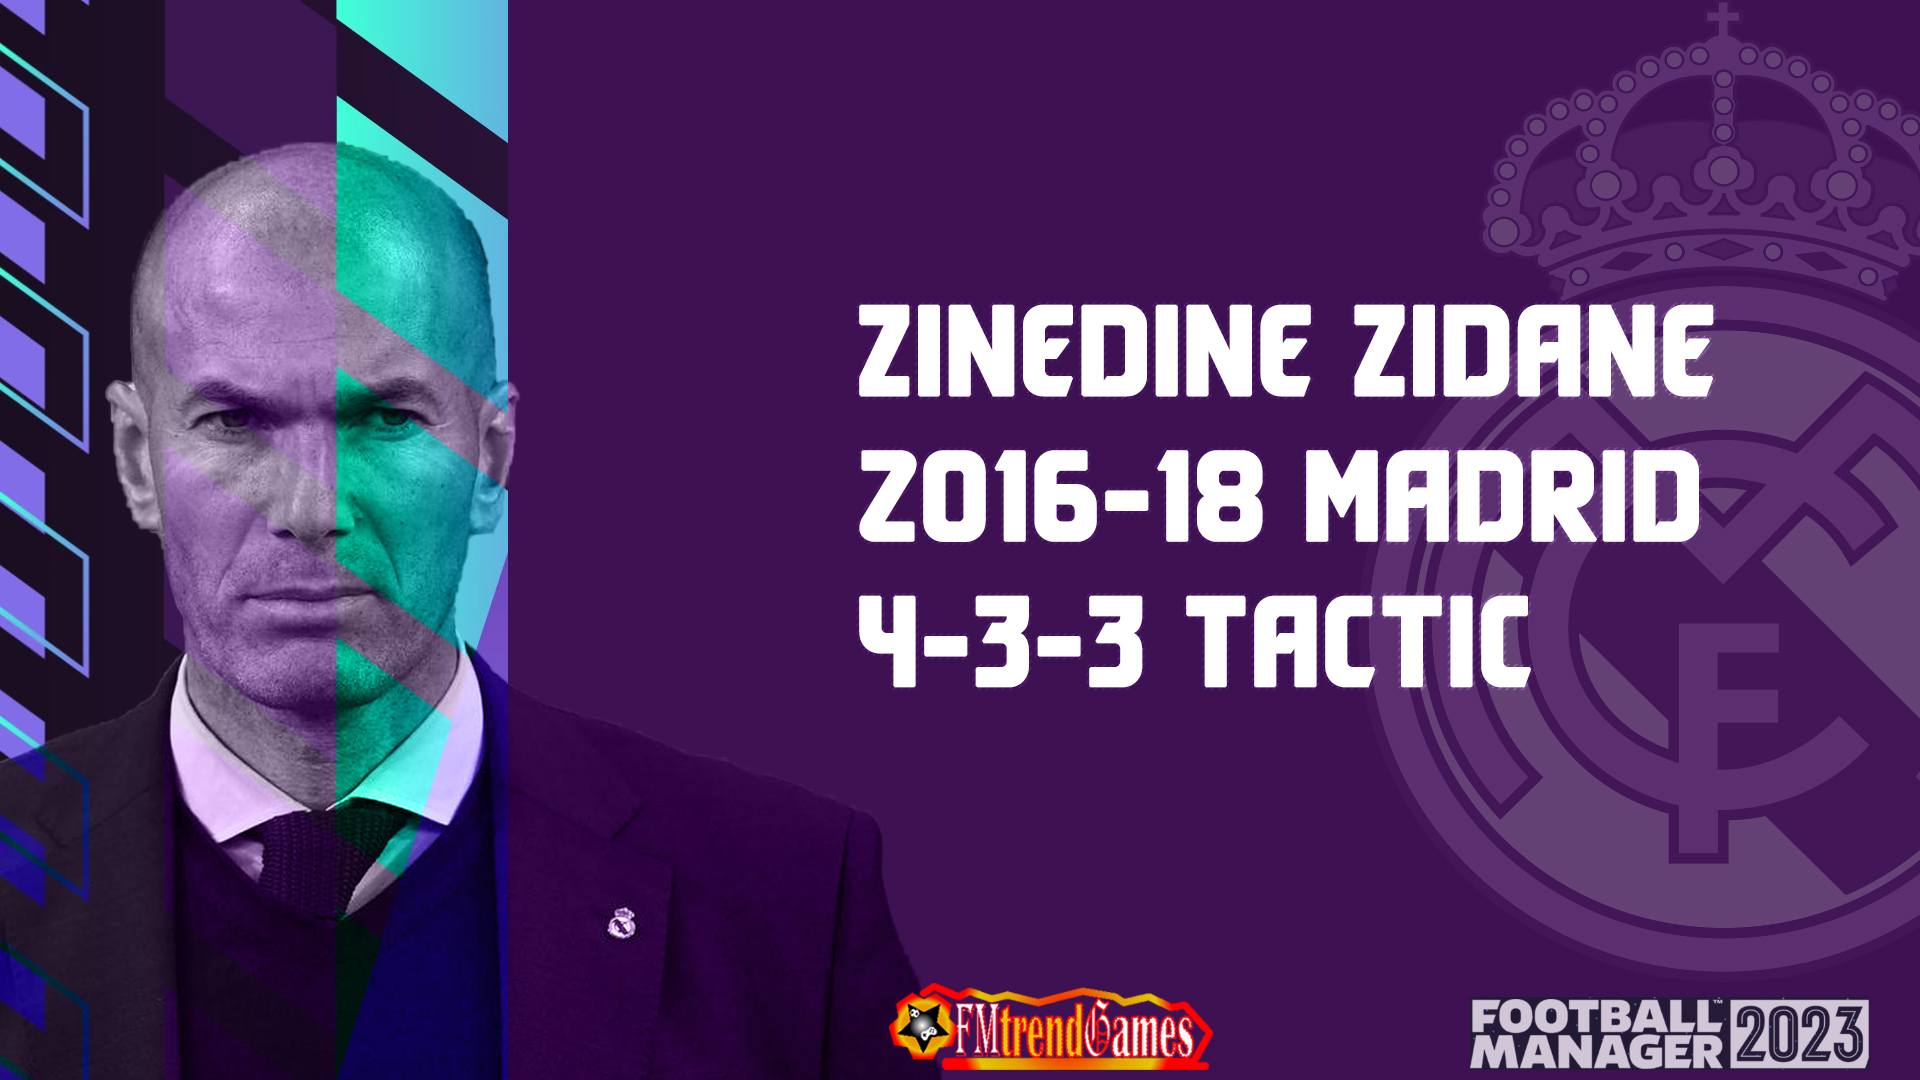 FM23 Zinedine Zidane 2016-18 4-3-3 Tactic at Madrid